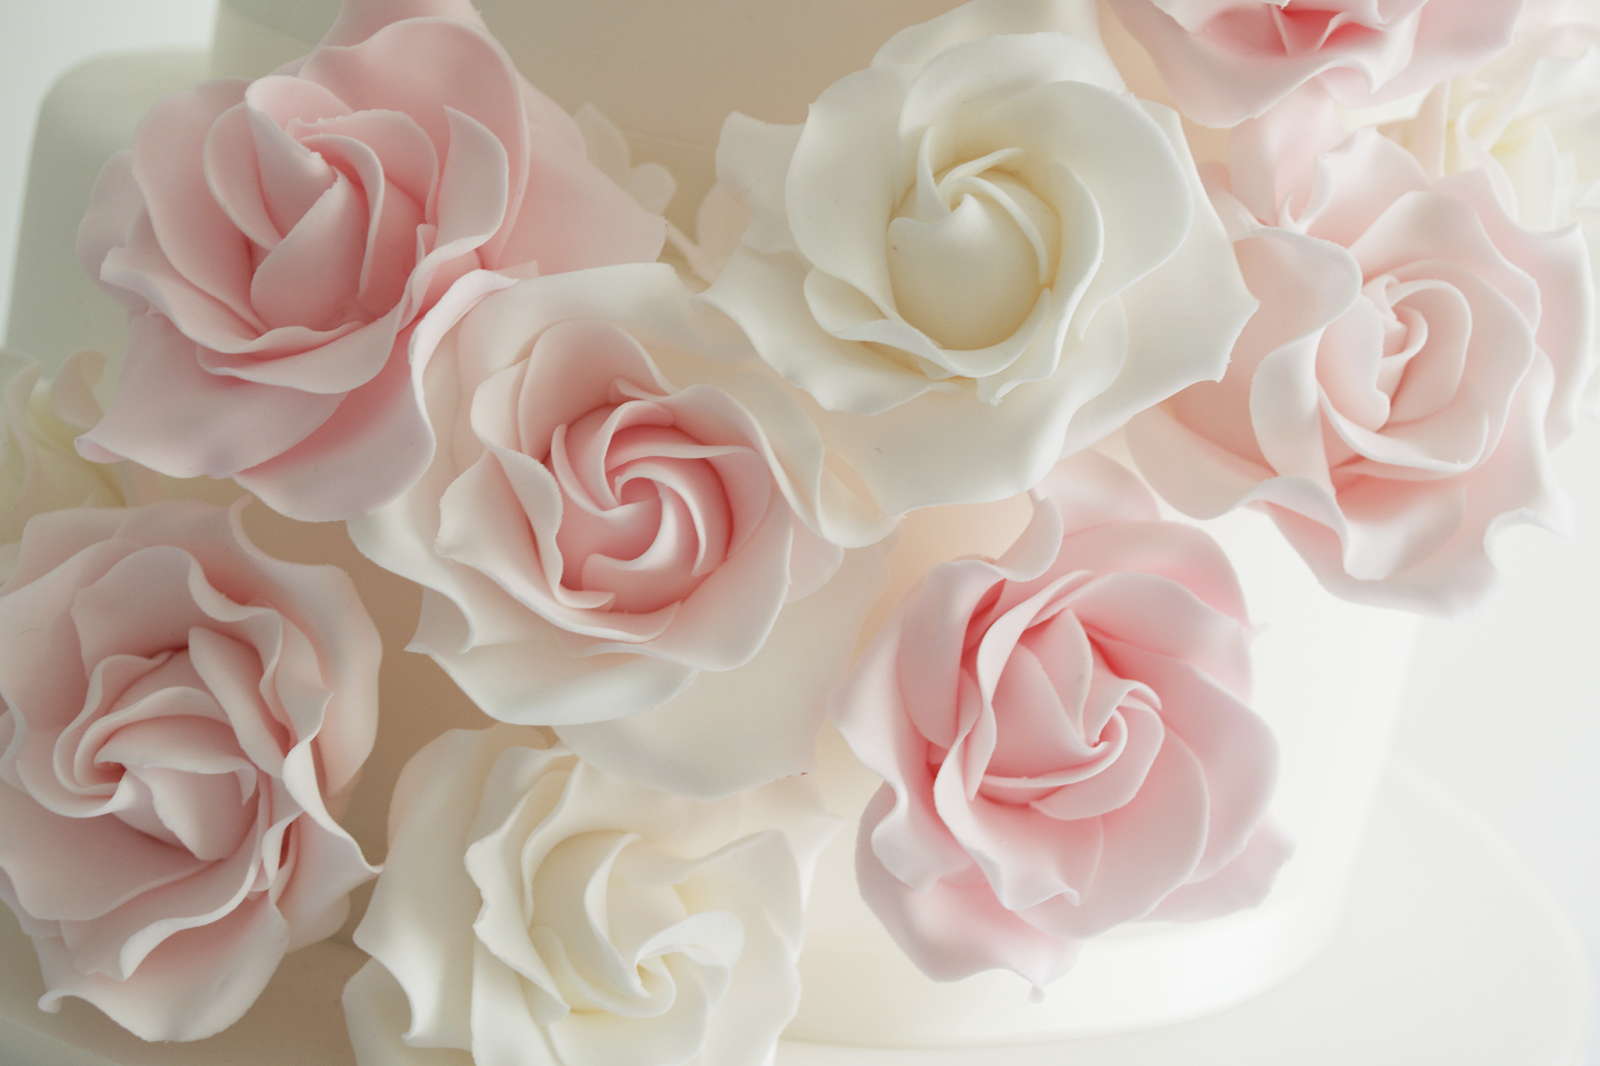 Pink Rose Cascade Wedding Cake